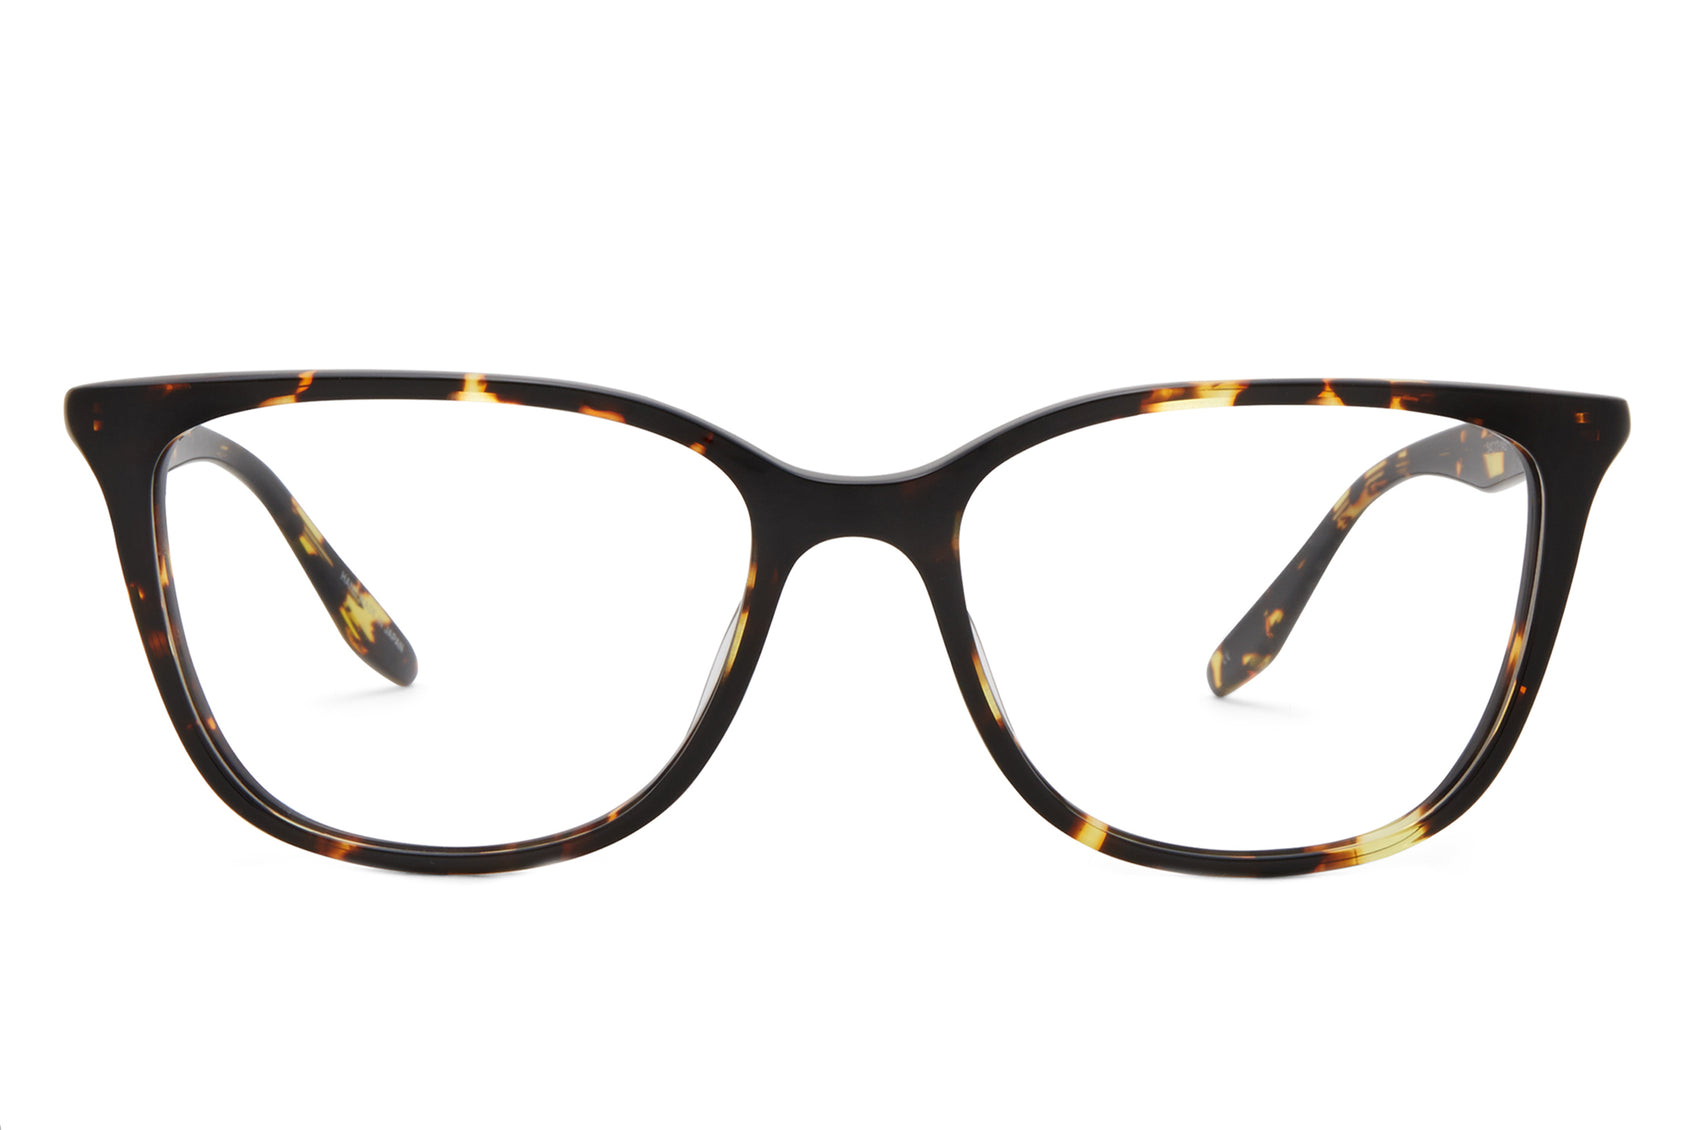 Ursula Luxury Glasses Cateye Frames For Women 2708